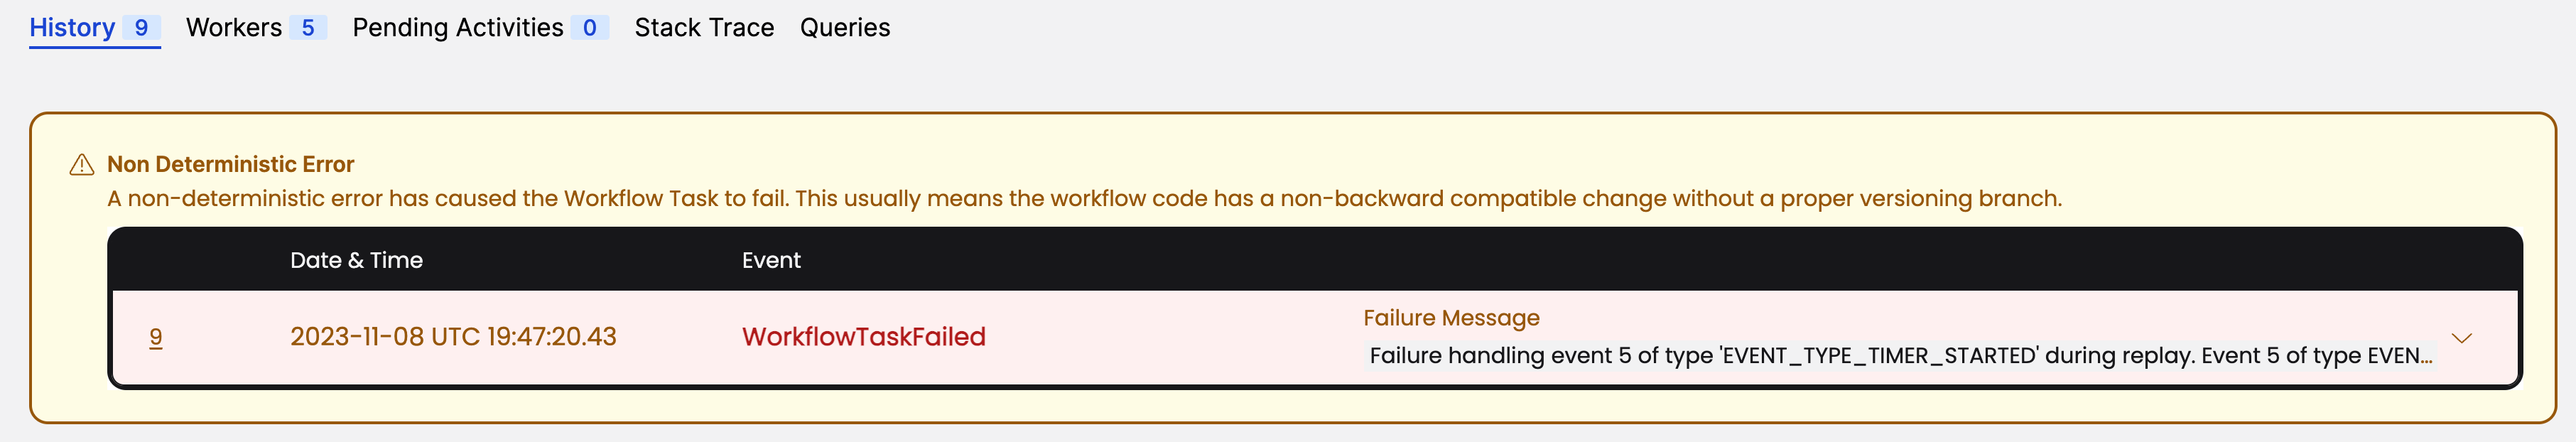 Web UI view of a non-determinism error